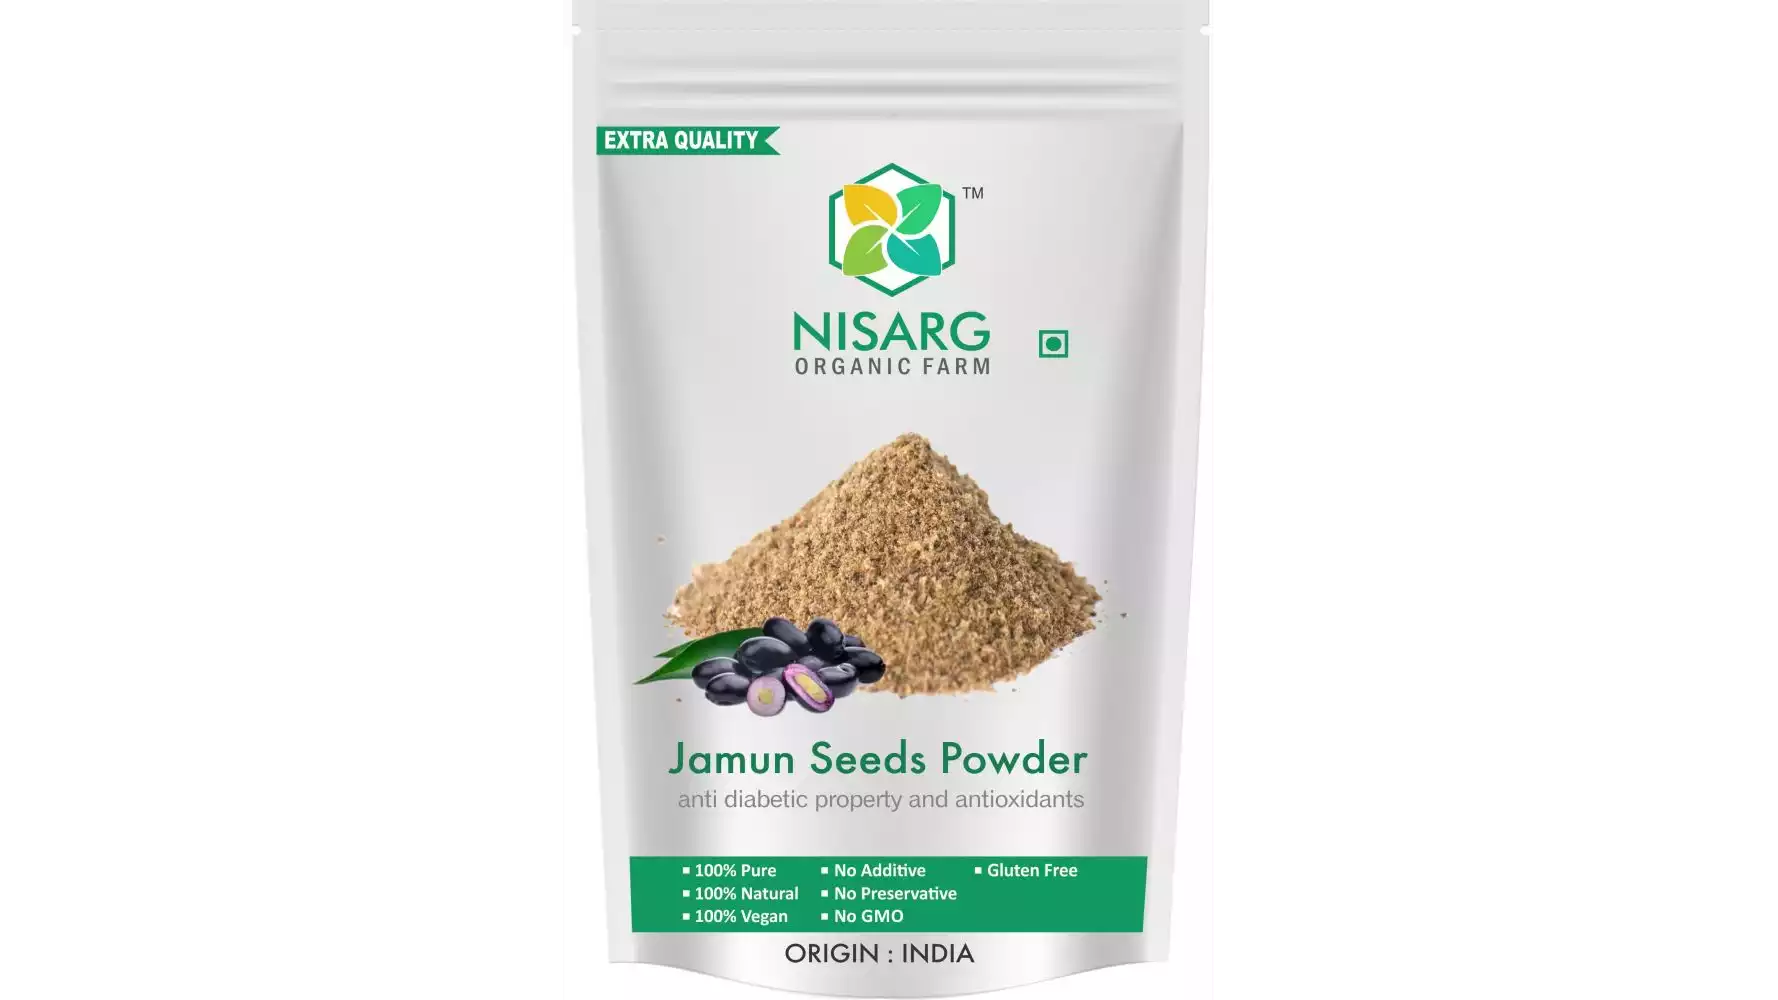 Nisarg Organic Farm Jamun Seeds Powder (500g)